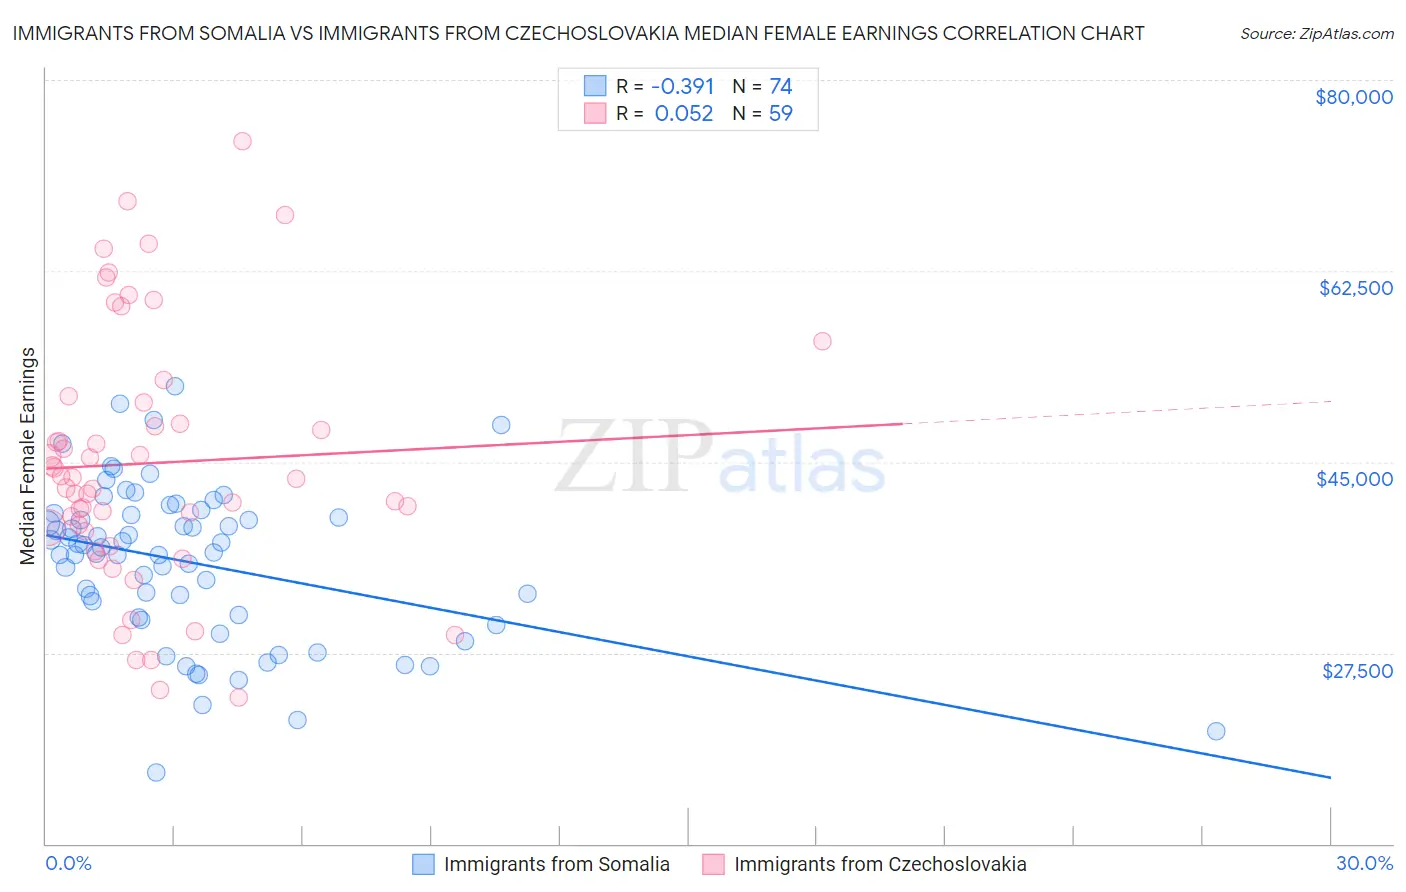 Immigrants from Somalia vs Immigrants from Czechoslovakia Median Female Earnings